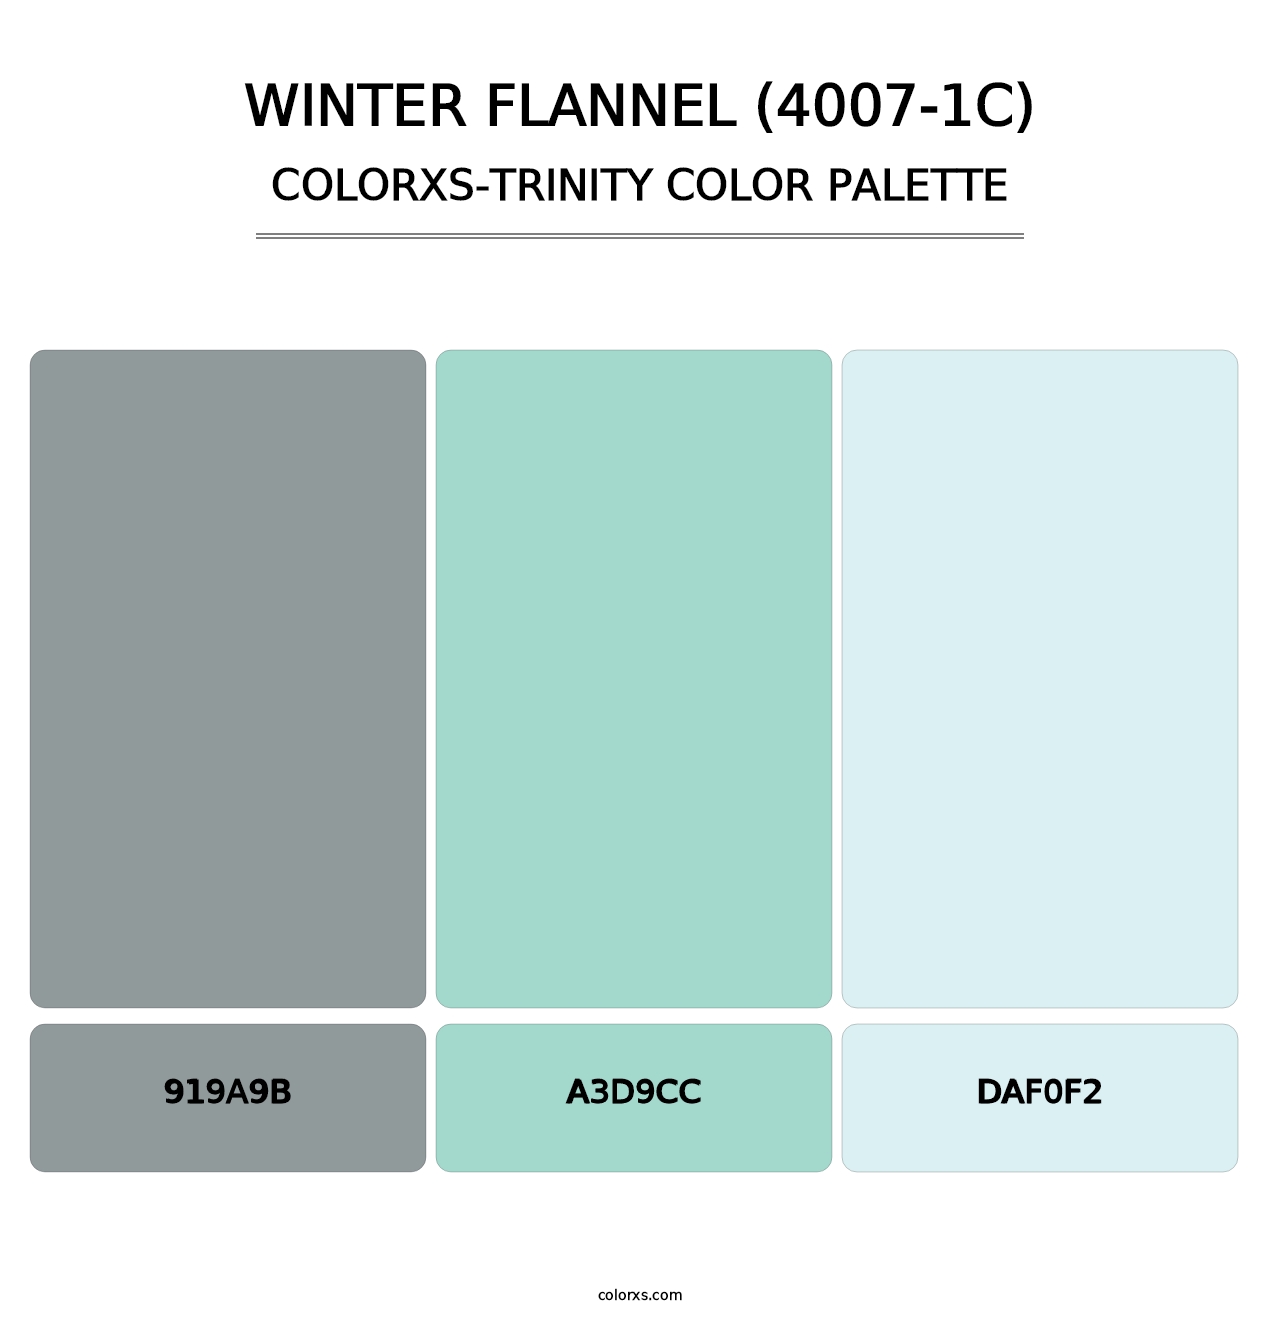 Winter Flannel (4007-1C) - Colorxs Trinity Palette